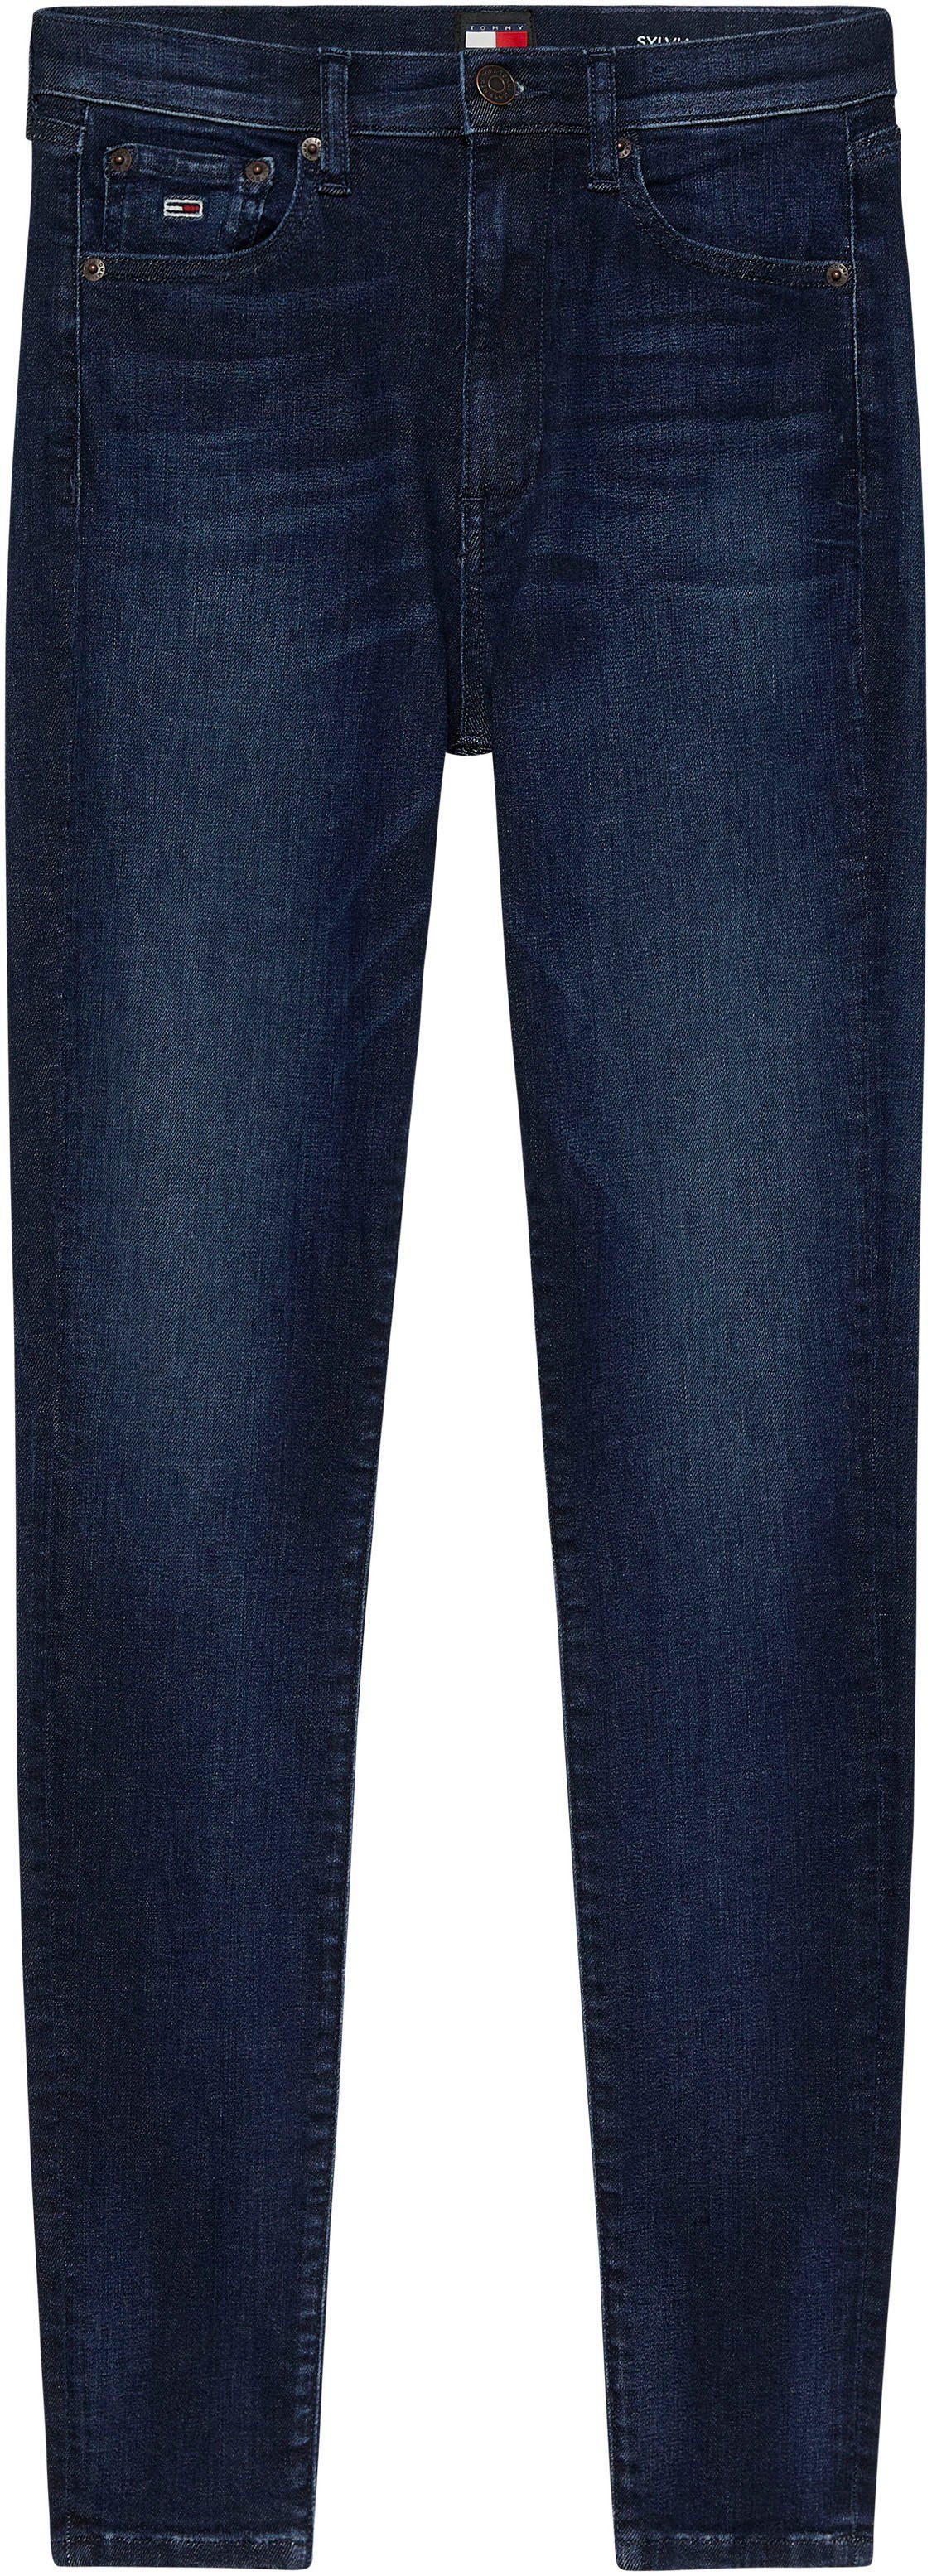 Tommy Jeans Bequeme Jeans mit Ledermarkenlabel Denim Sylvia Dark1